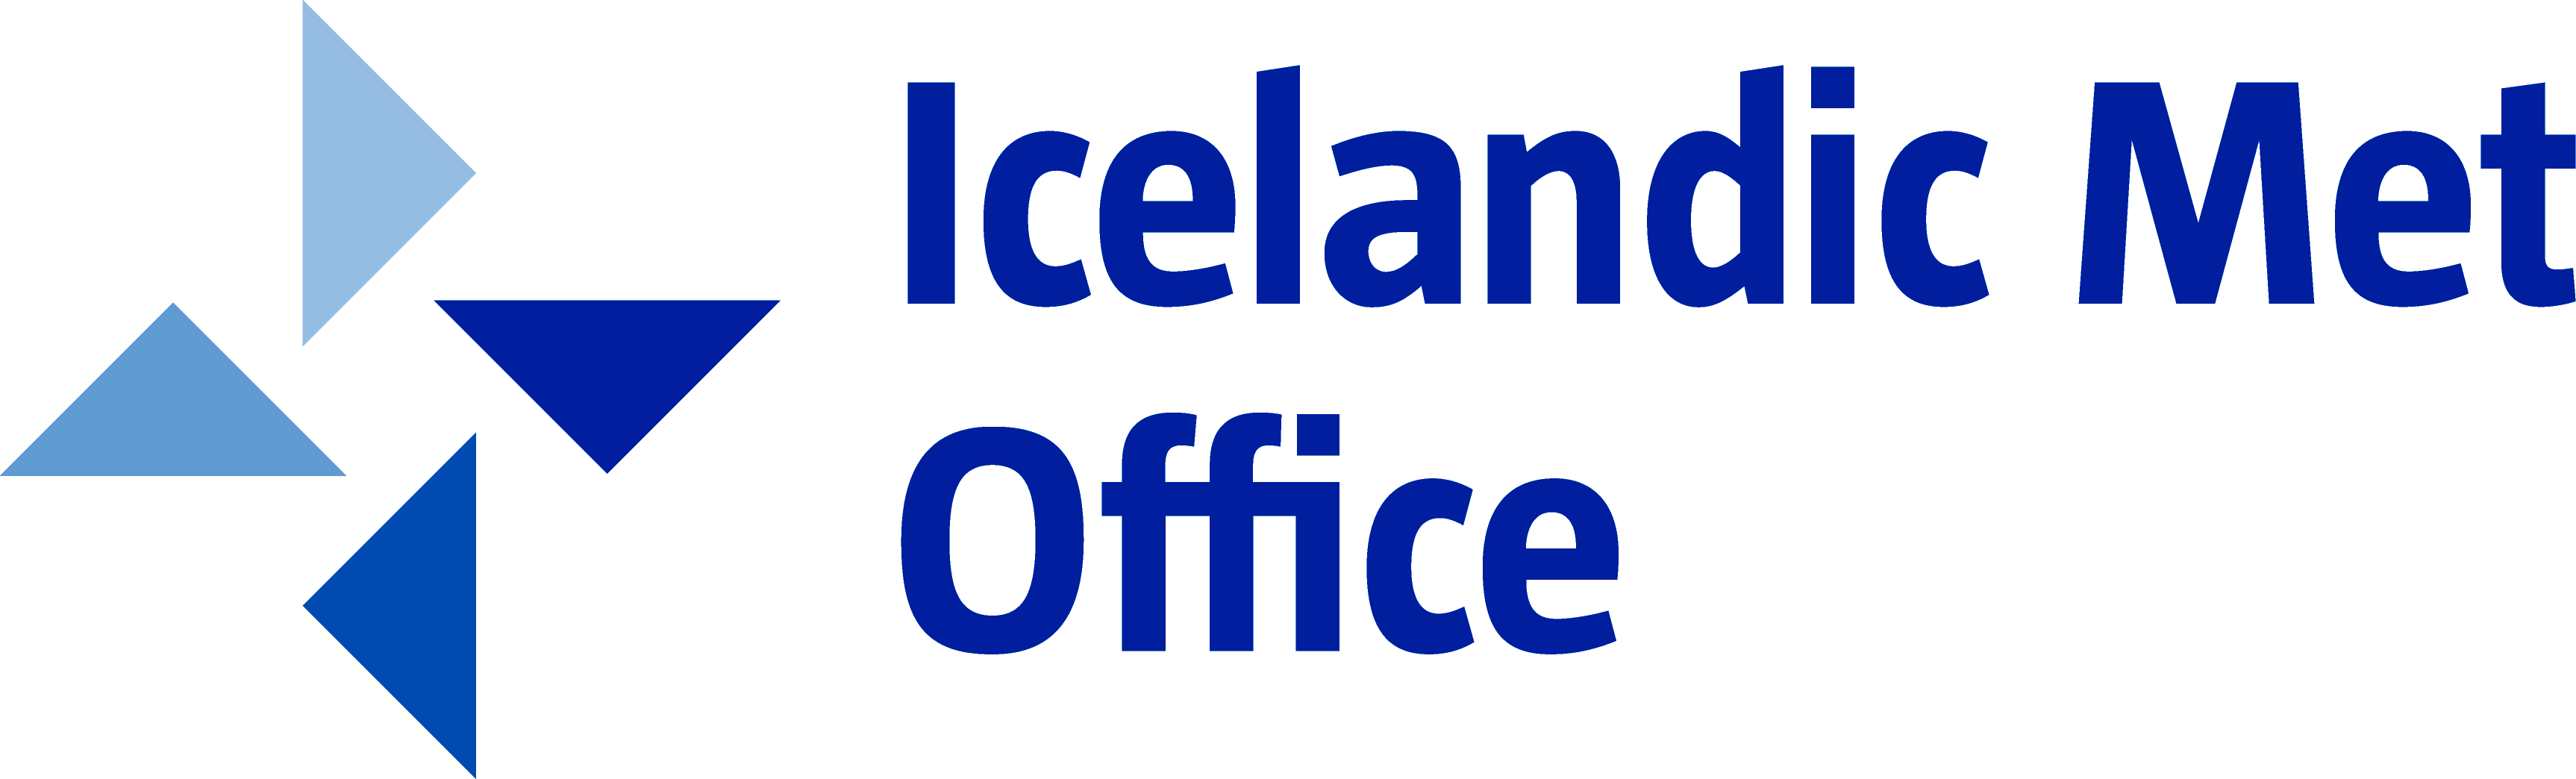 Icelandic Meteorological Office logo